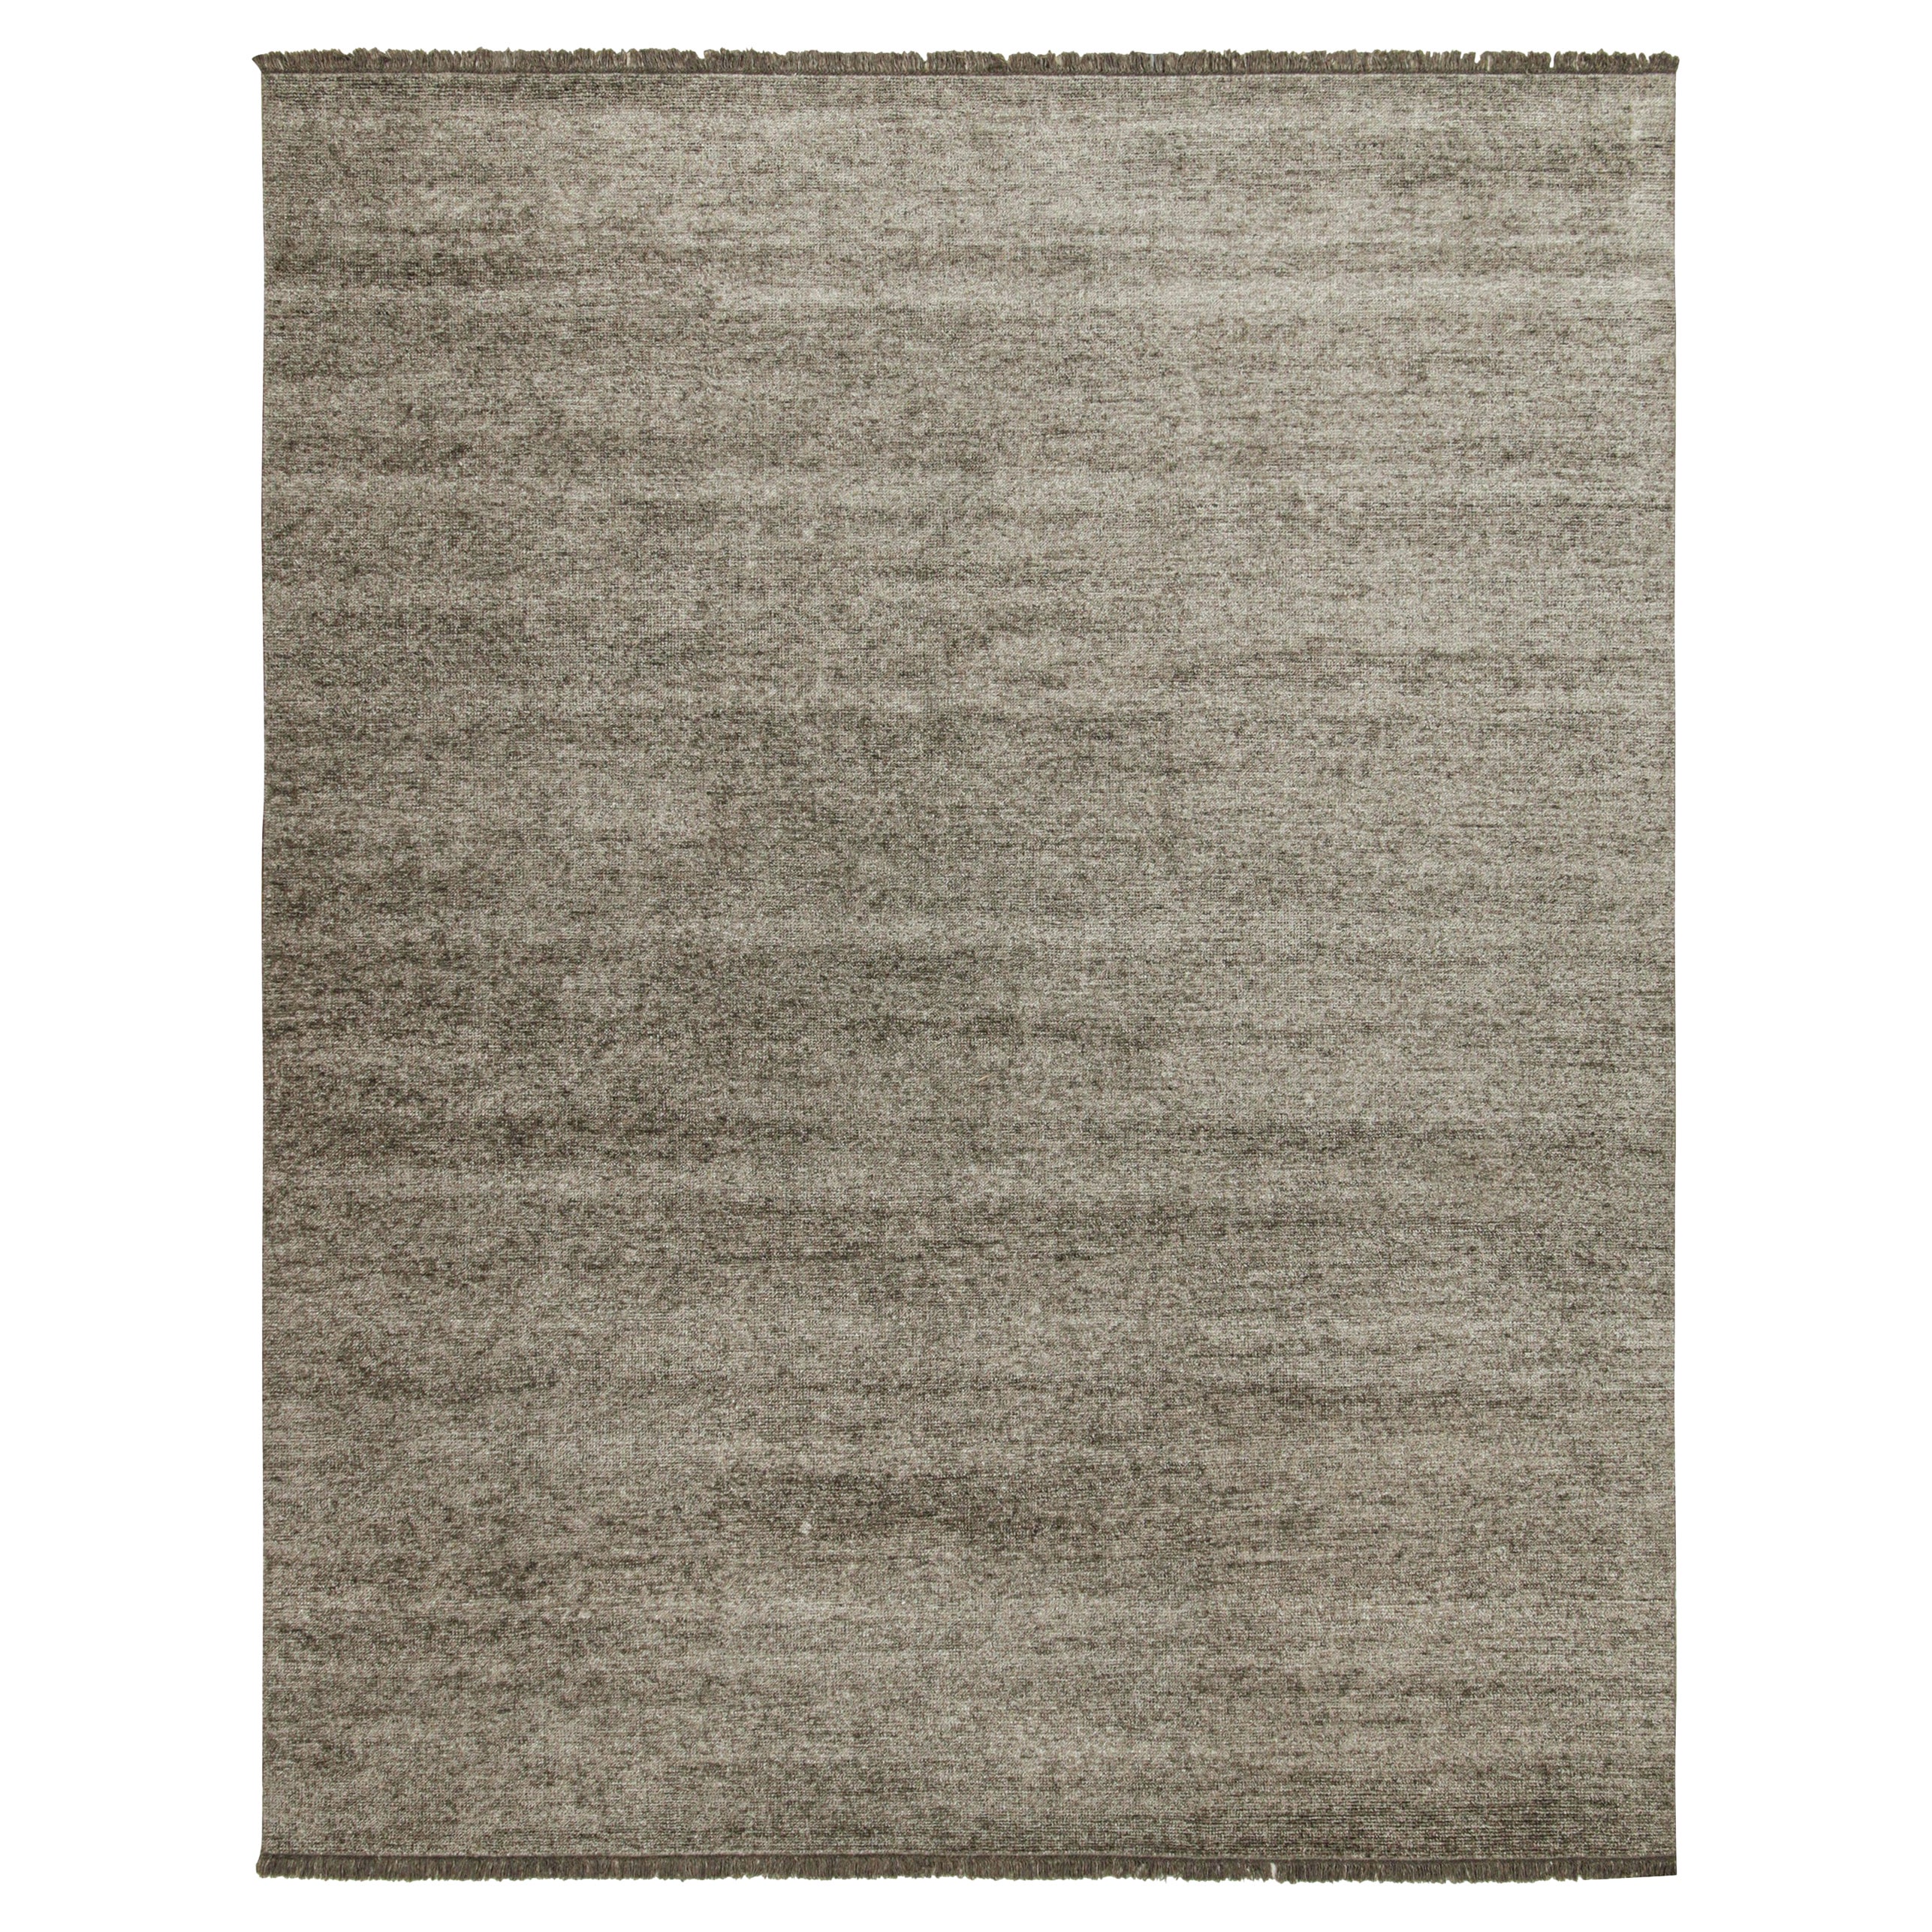 Rug & Kilim's Moderner Teppich in massivem Silber-Grau Ton-in-Ton-Streifen